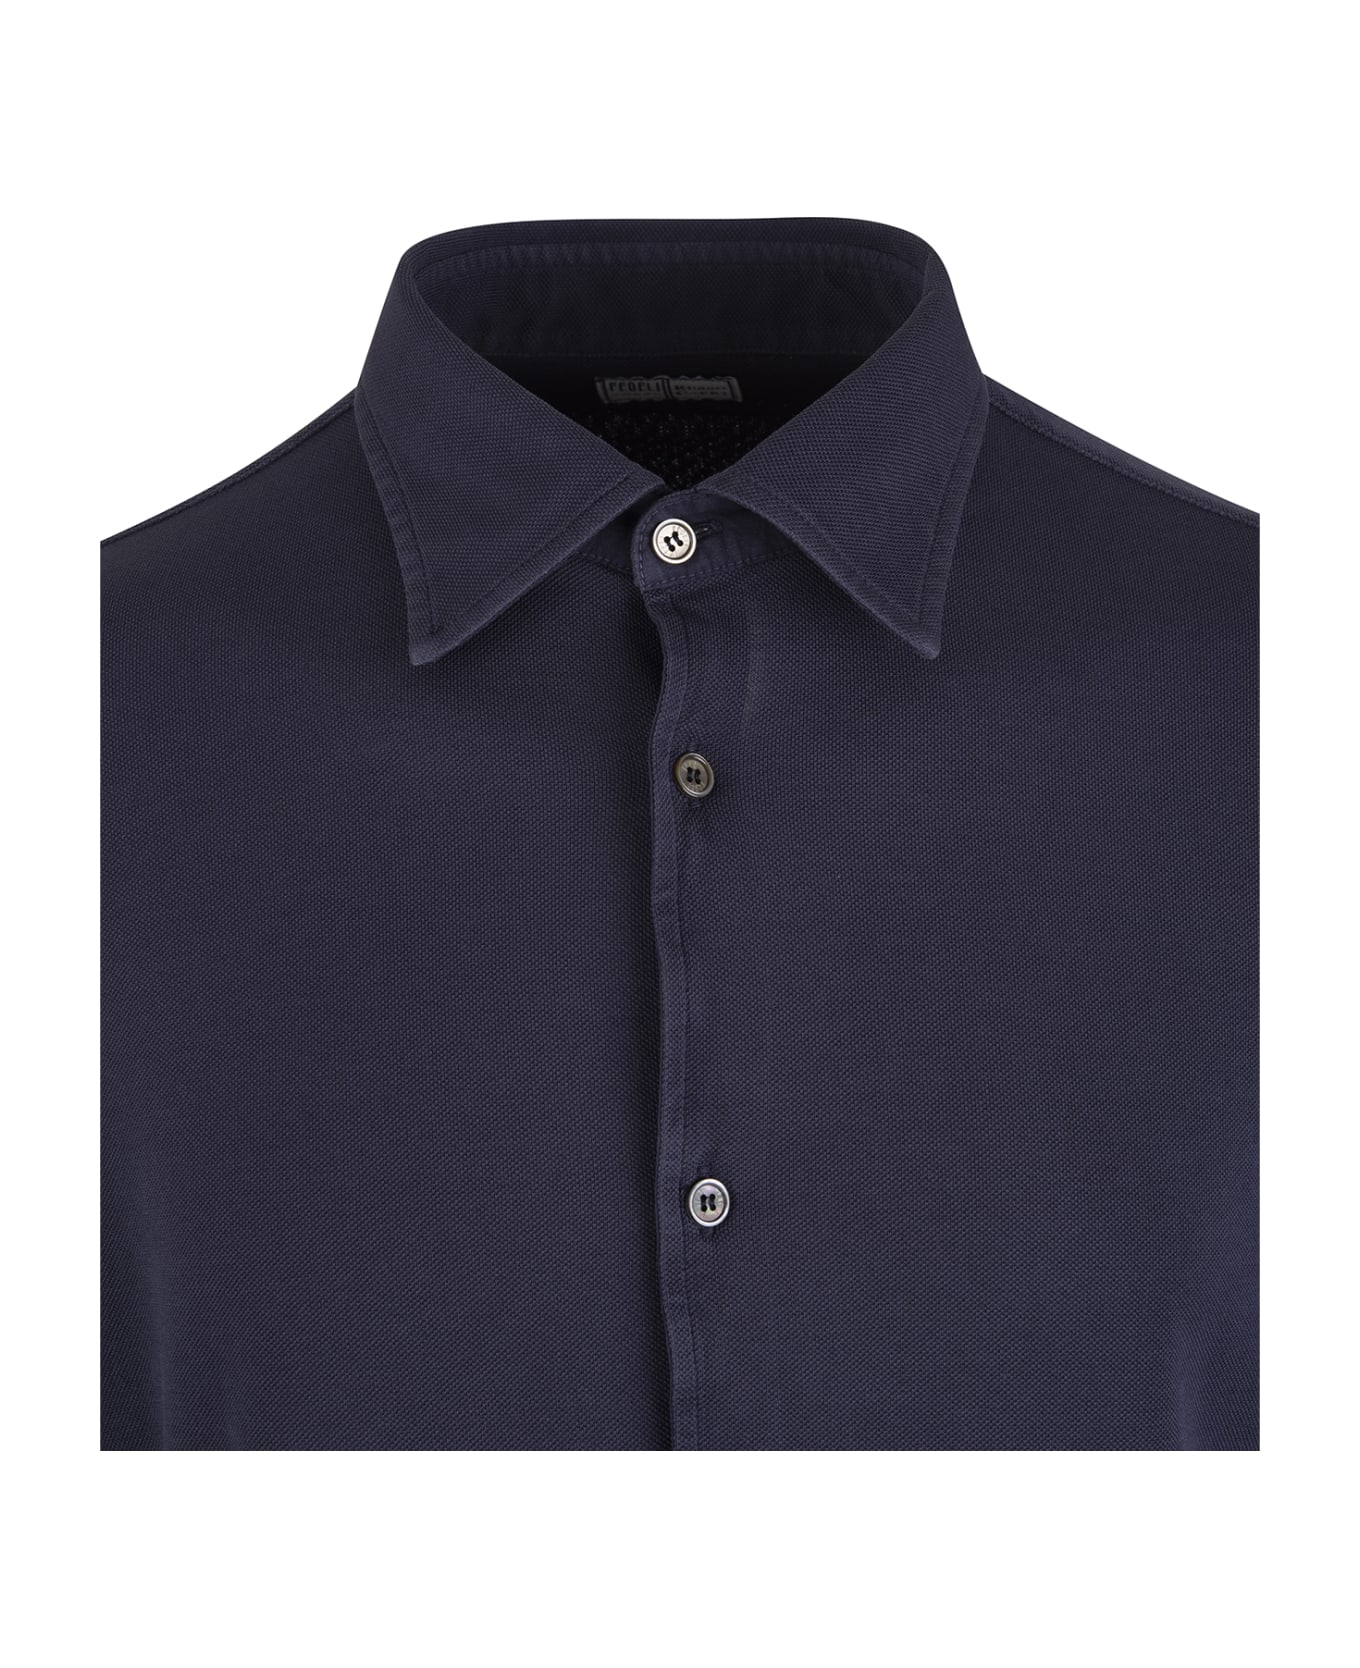 Fedeli Man Shirt In Navy Blue Cotton Piqué - Blue